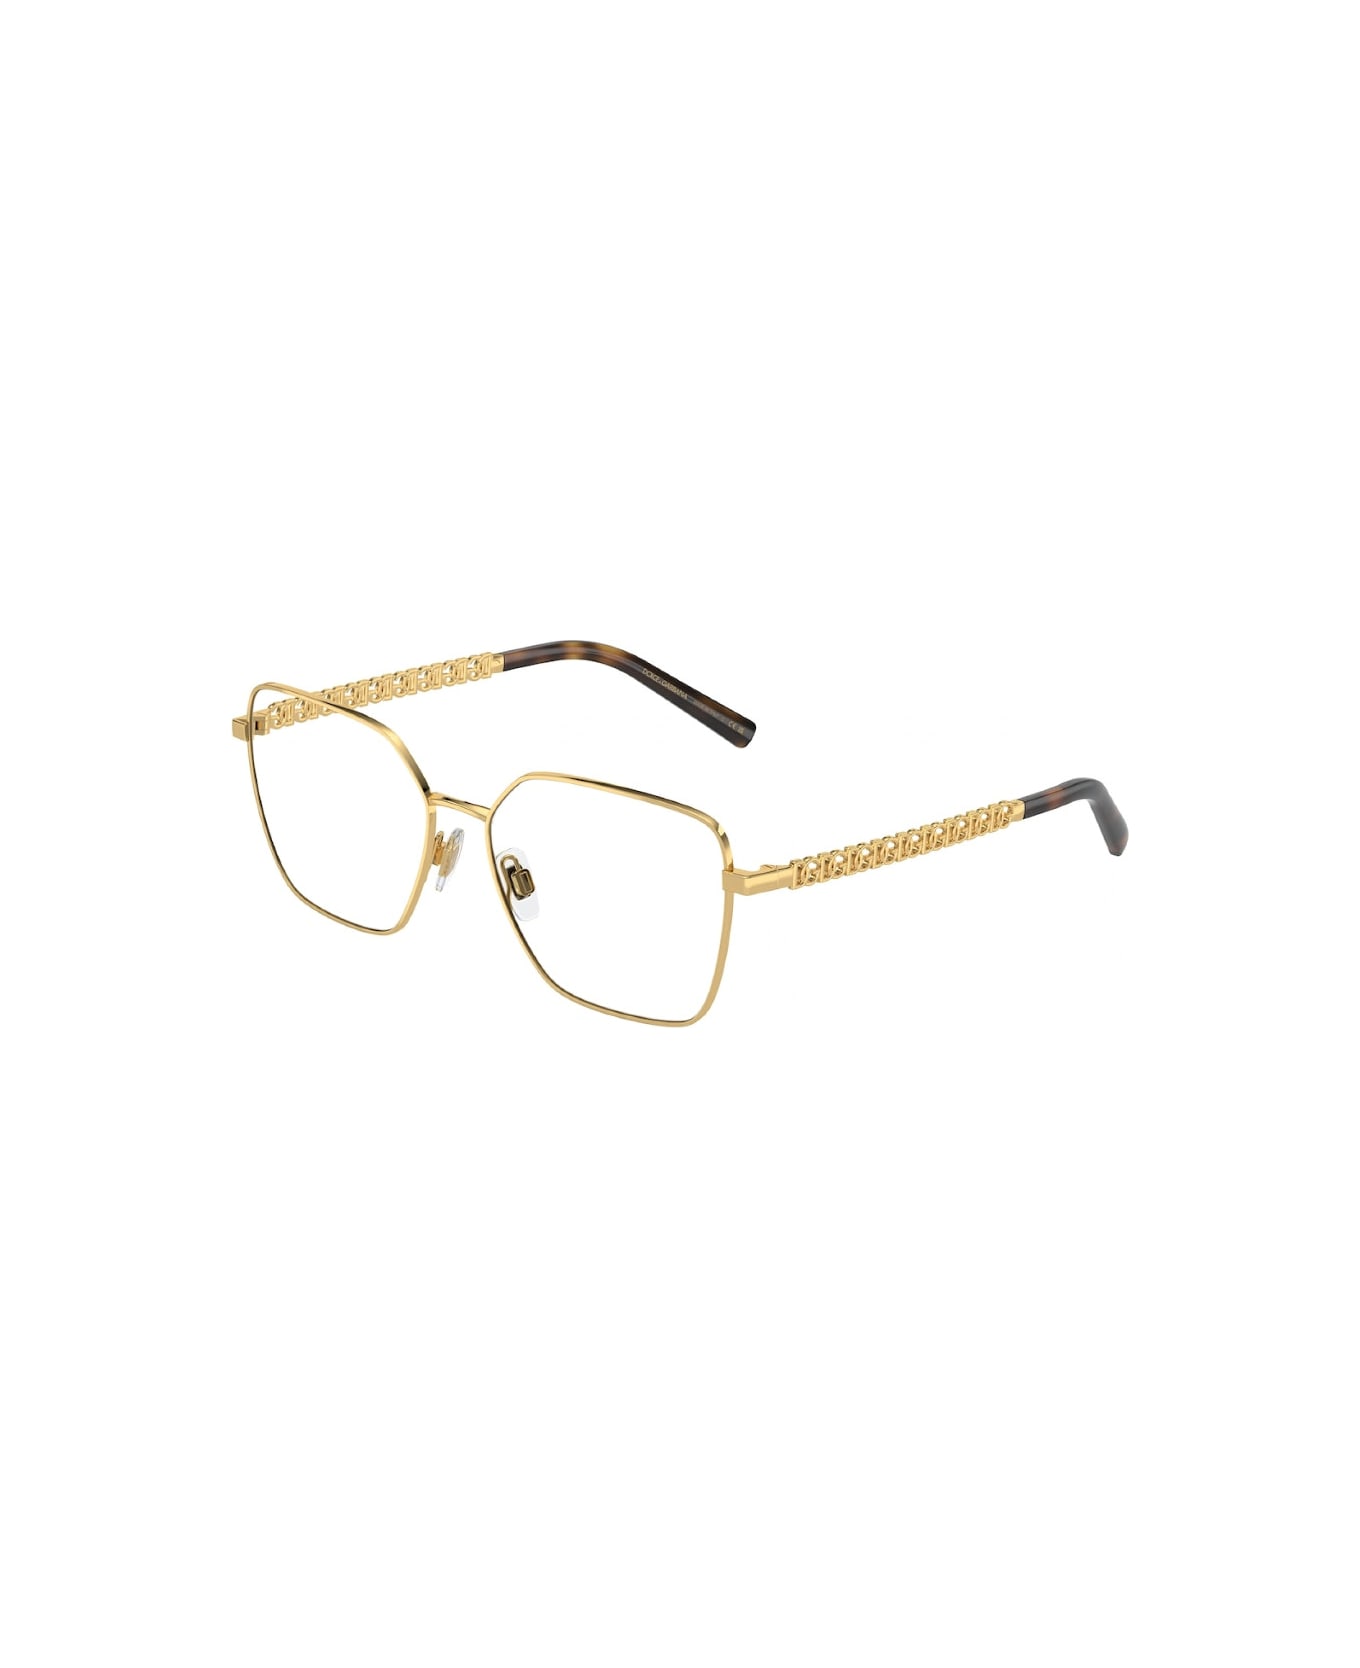 Dolce & Gabbana Eyewear DG1351 02 Glasses